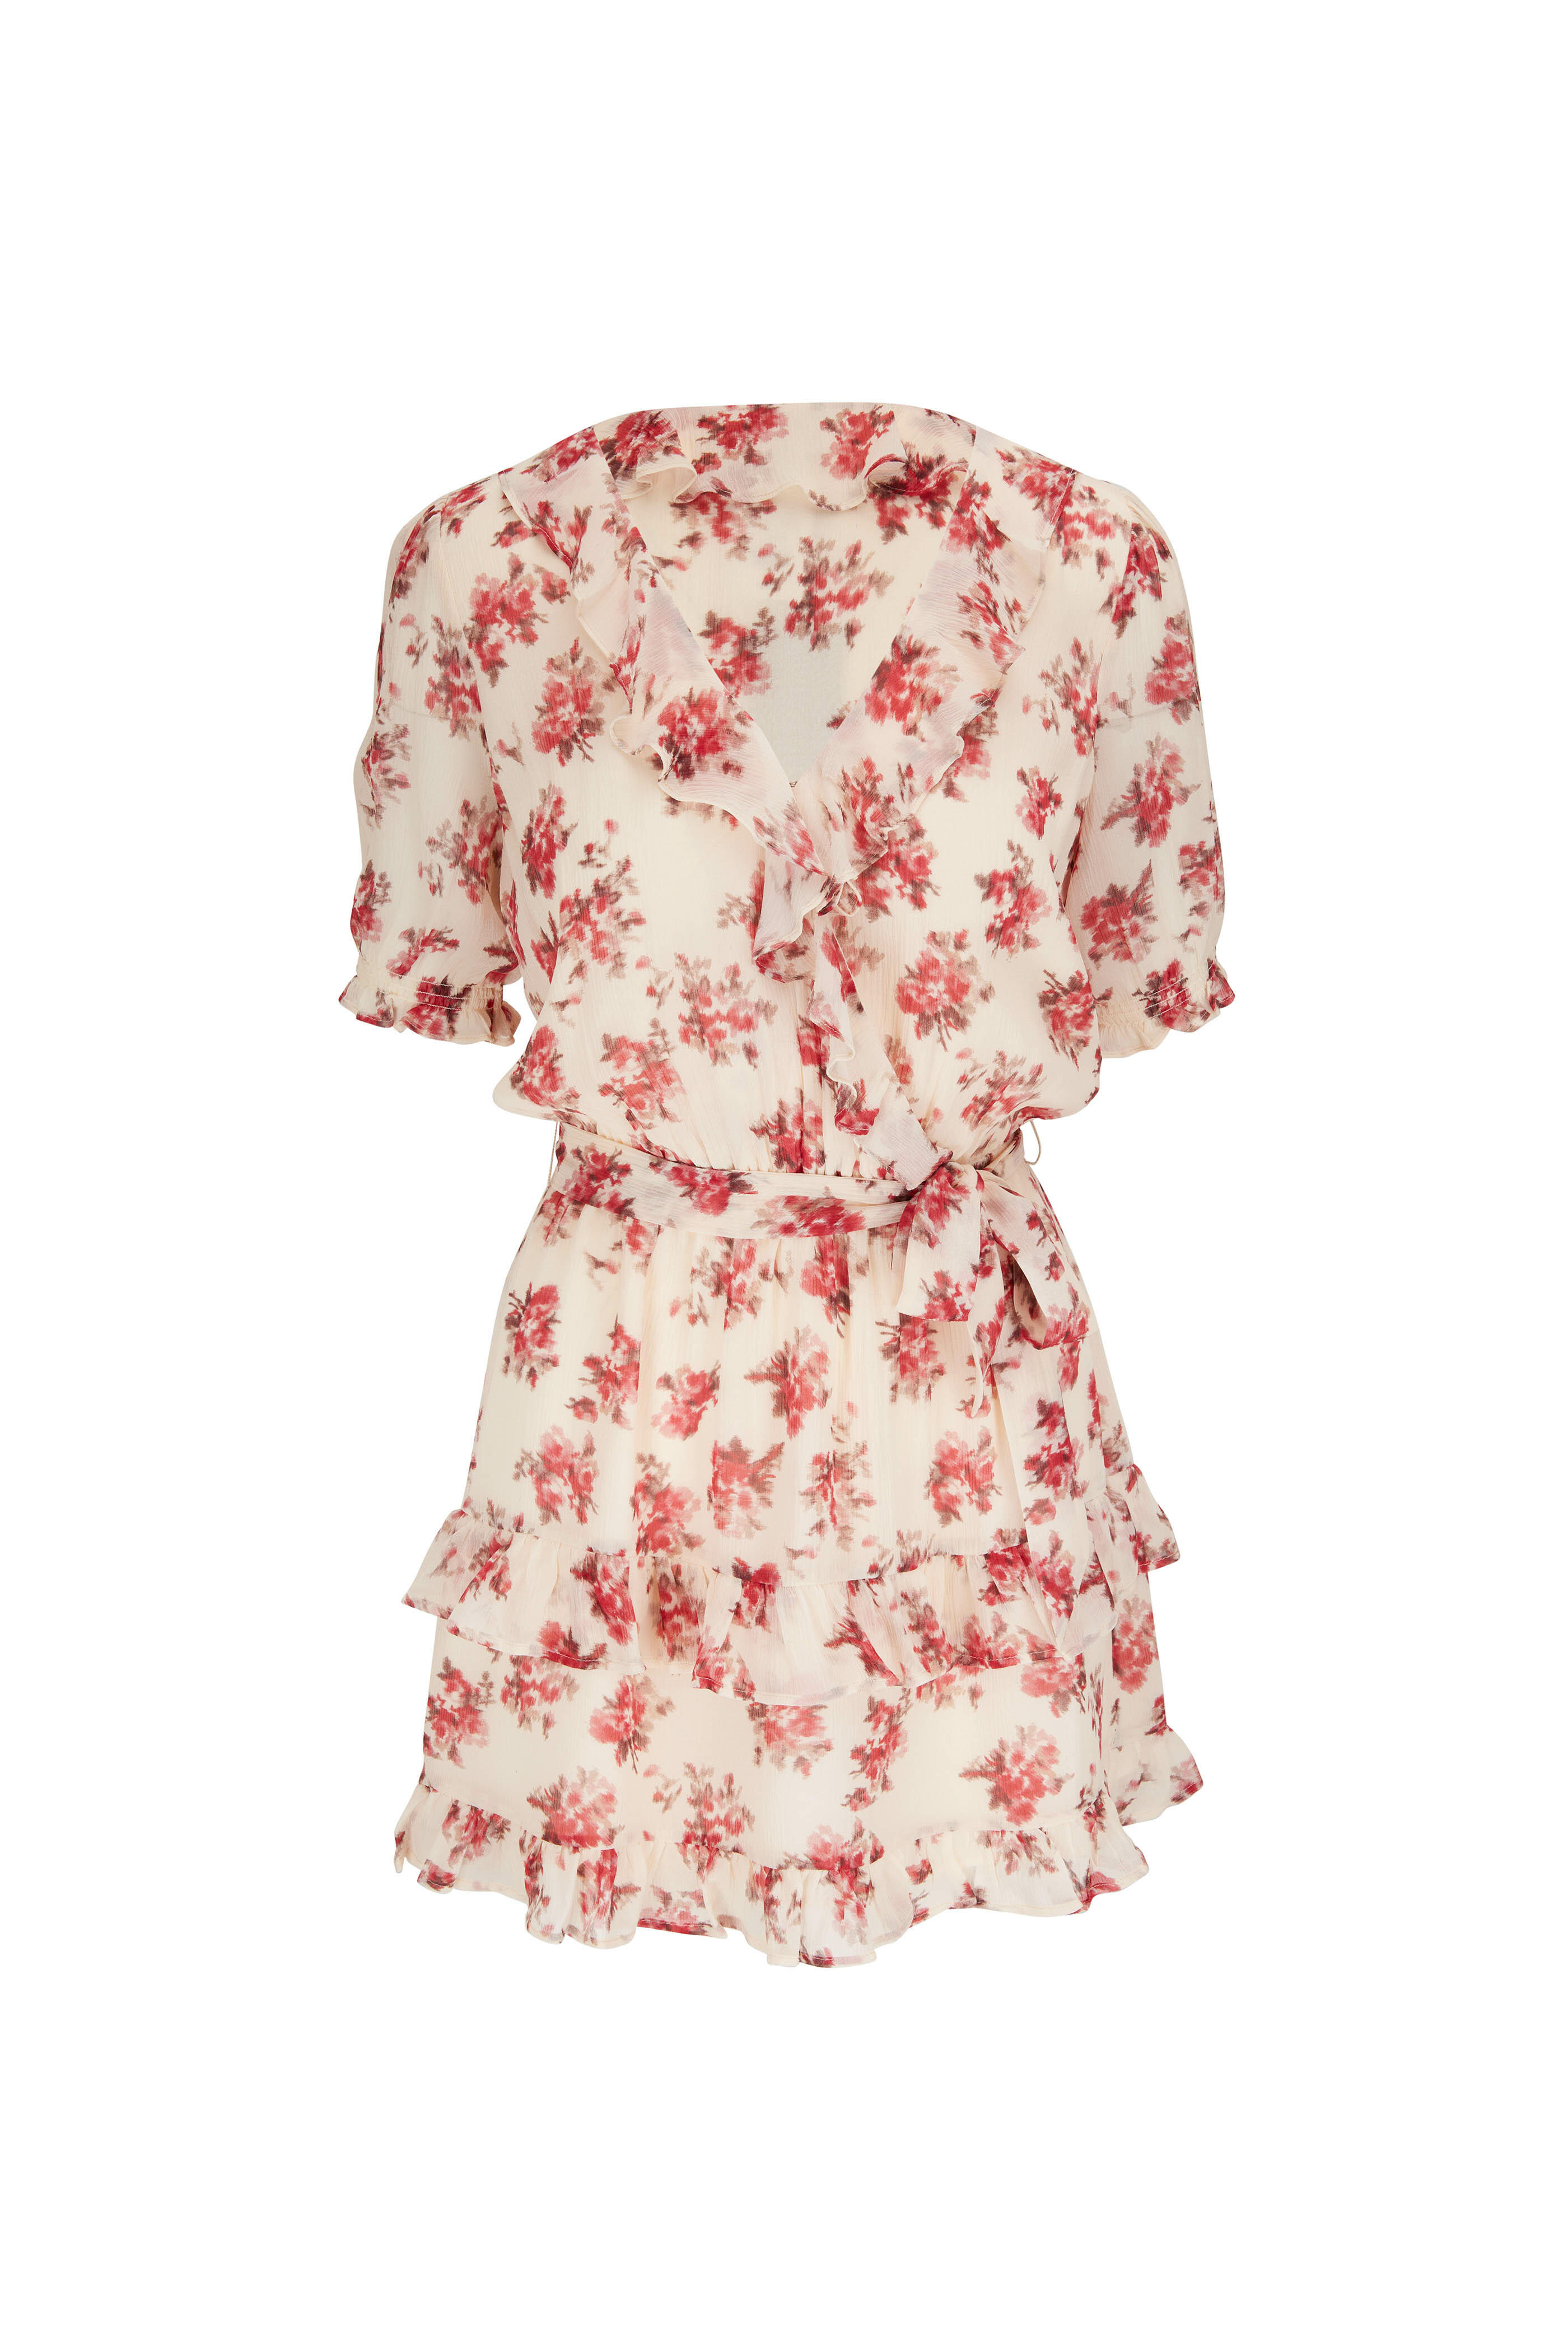 PAIGE - Evonna Cream & Red Floral Print Mini Dress